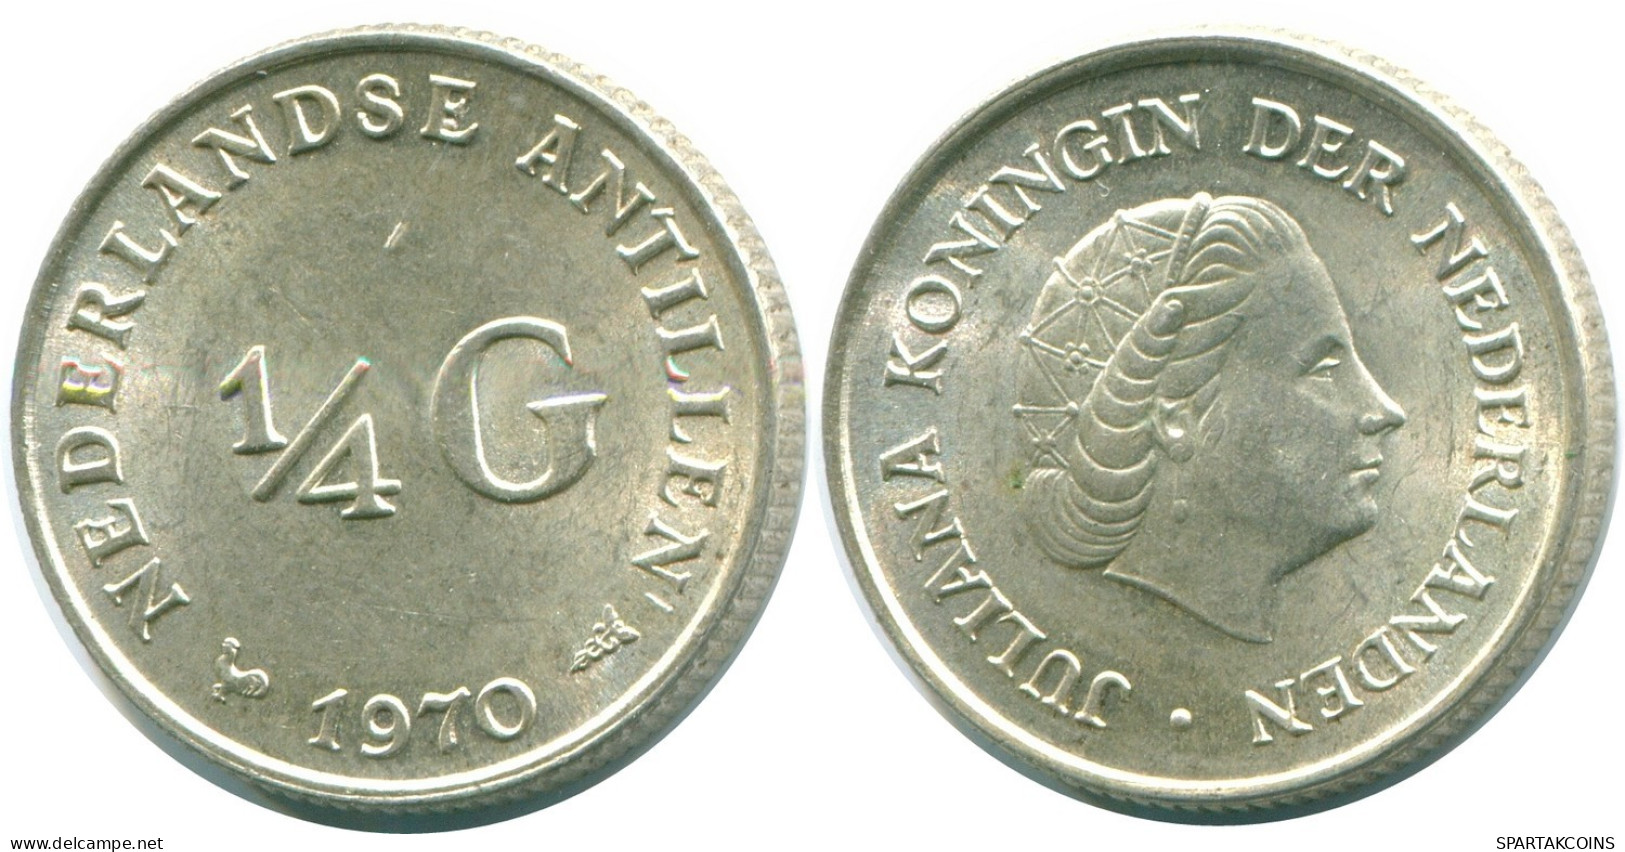 1/4 GULDEN 1970 NETHERLANDS ANTILLES SILVER Colonial Coin #NL11631.4.U.A - Antilles Néerlandaises